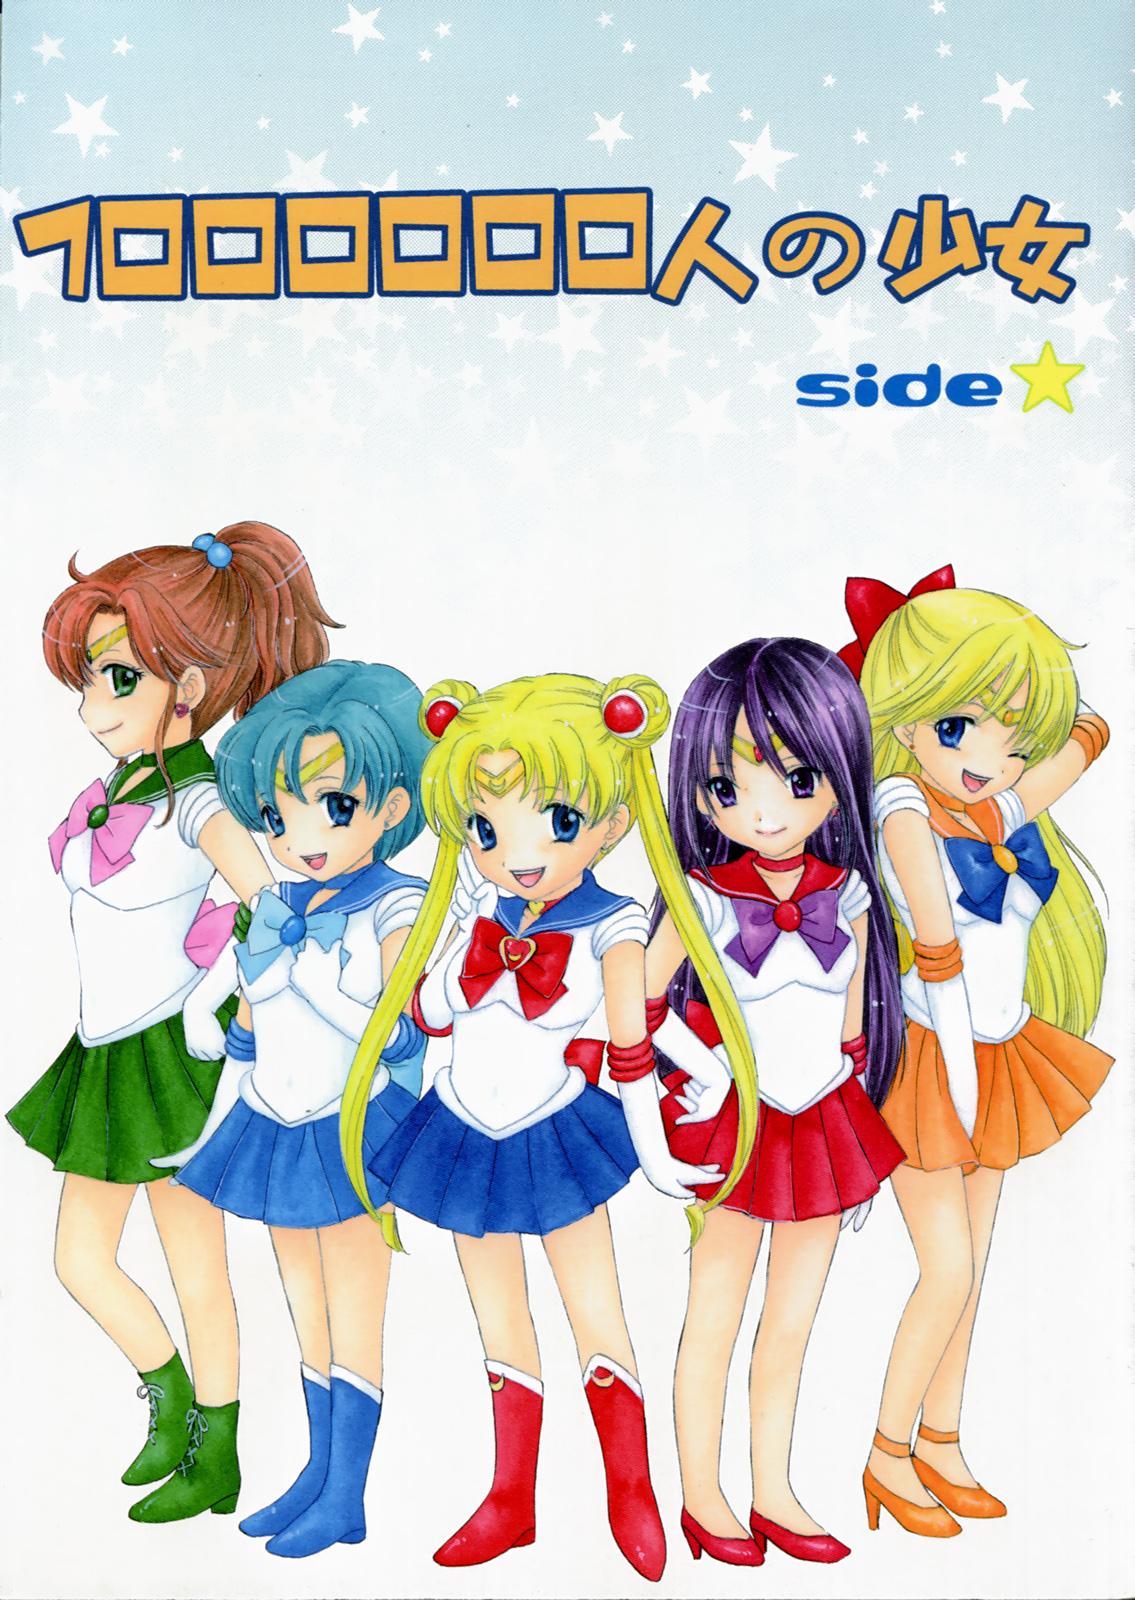 Gay Outinpublic 1000000-nin no Shoujo side star - Sailor moon 18yo - Picture 1